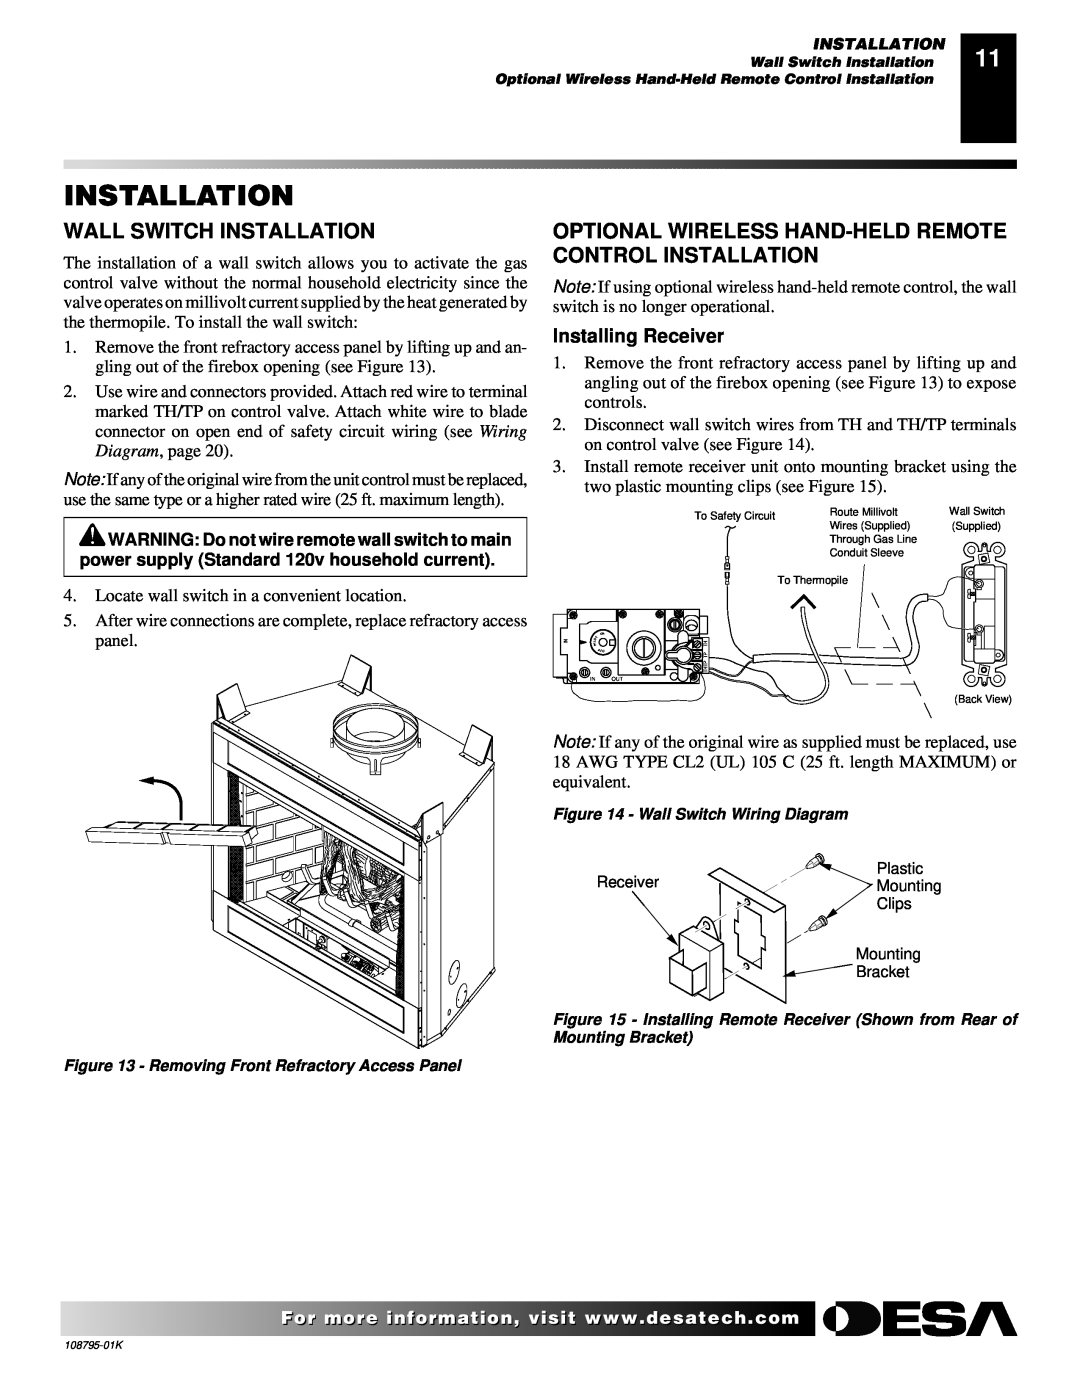 Desa AND VM42 installation manual Wall Switch Installation, Installing Receiver 